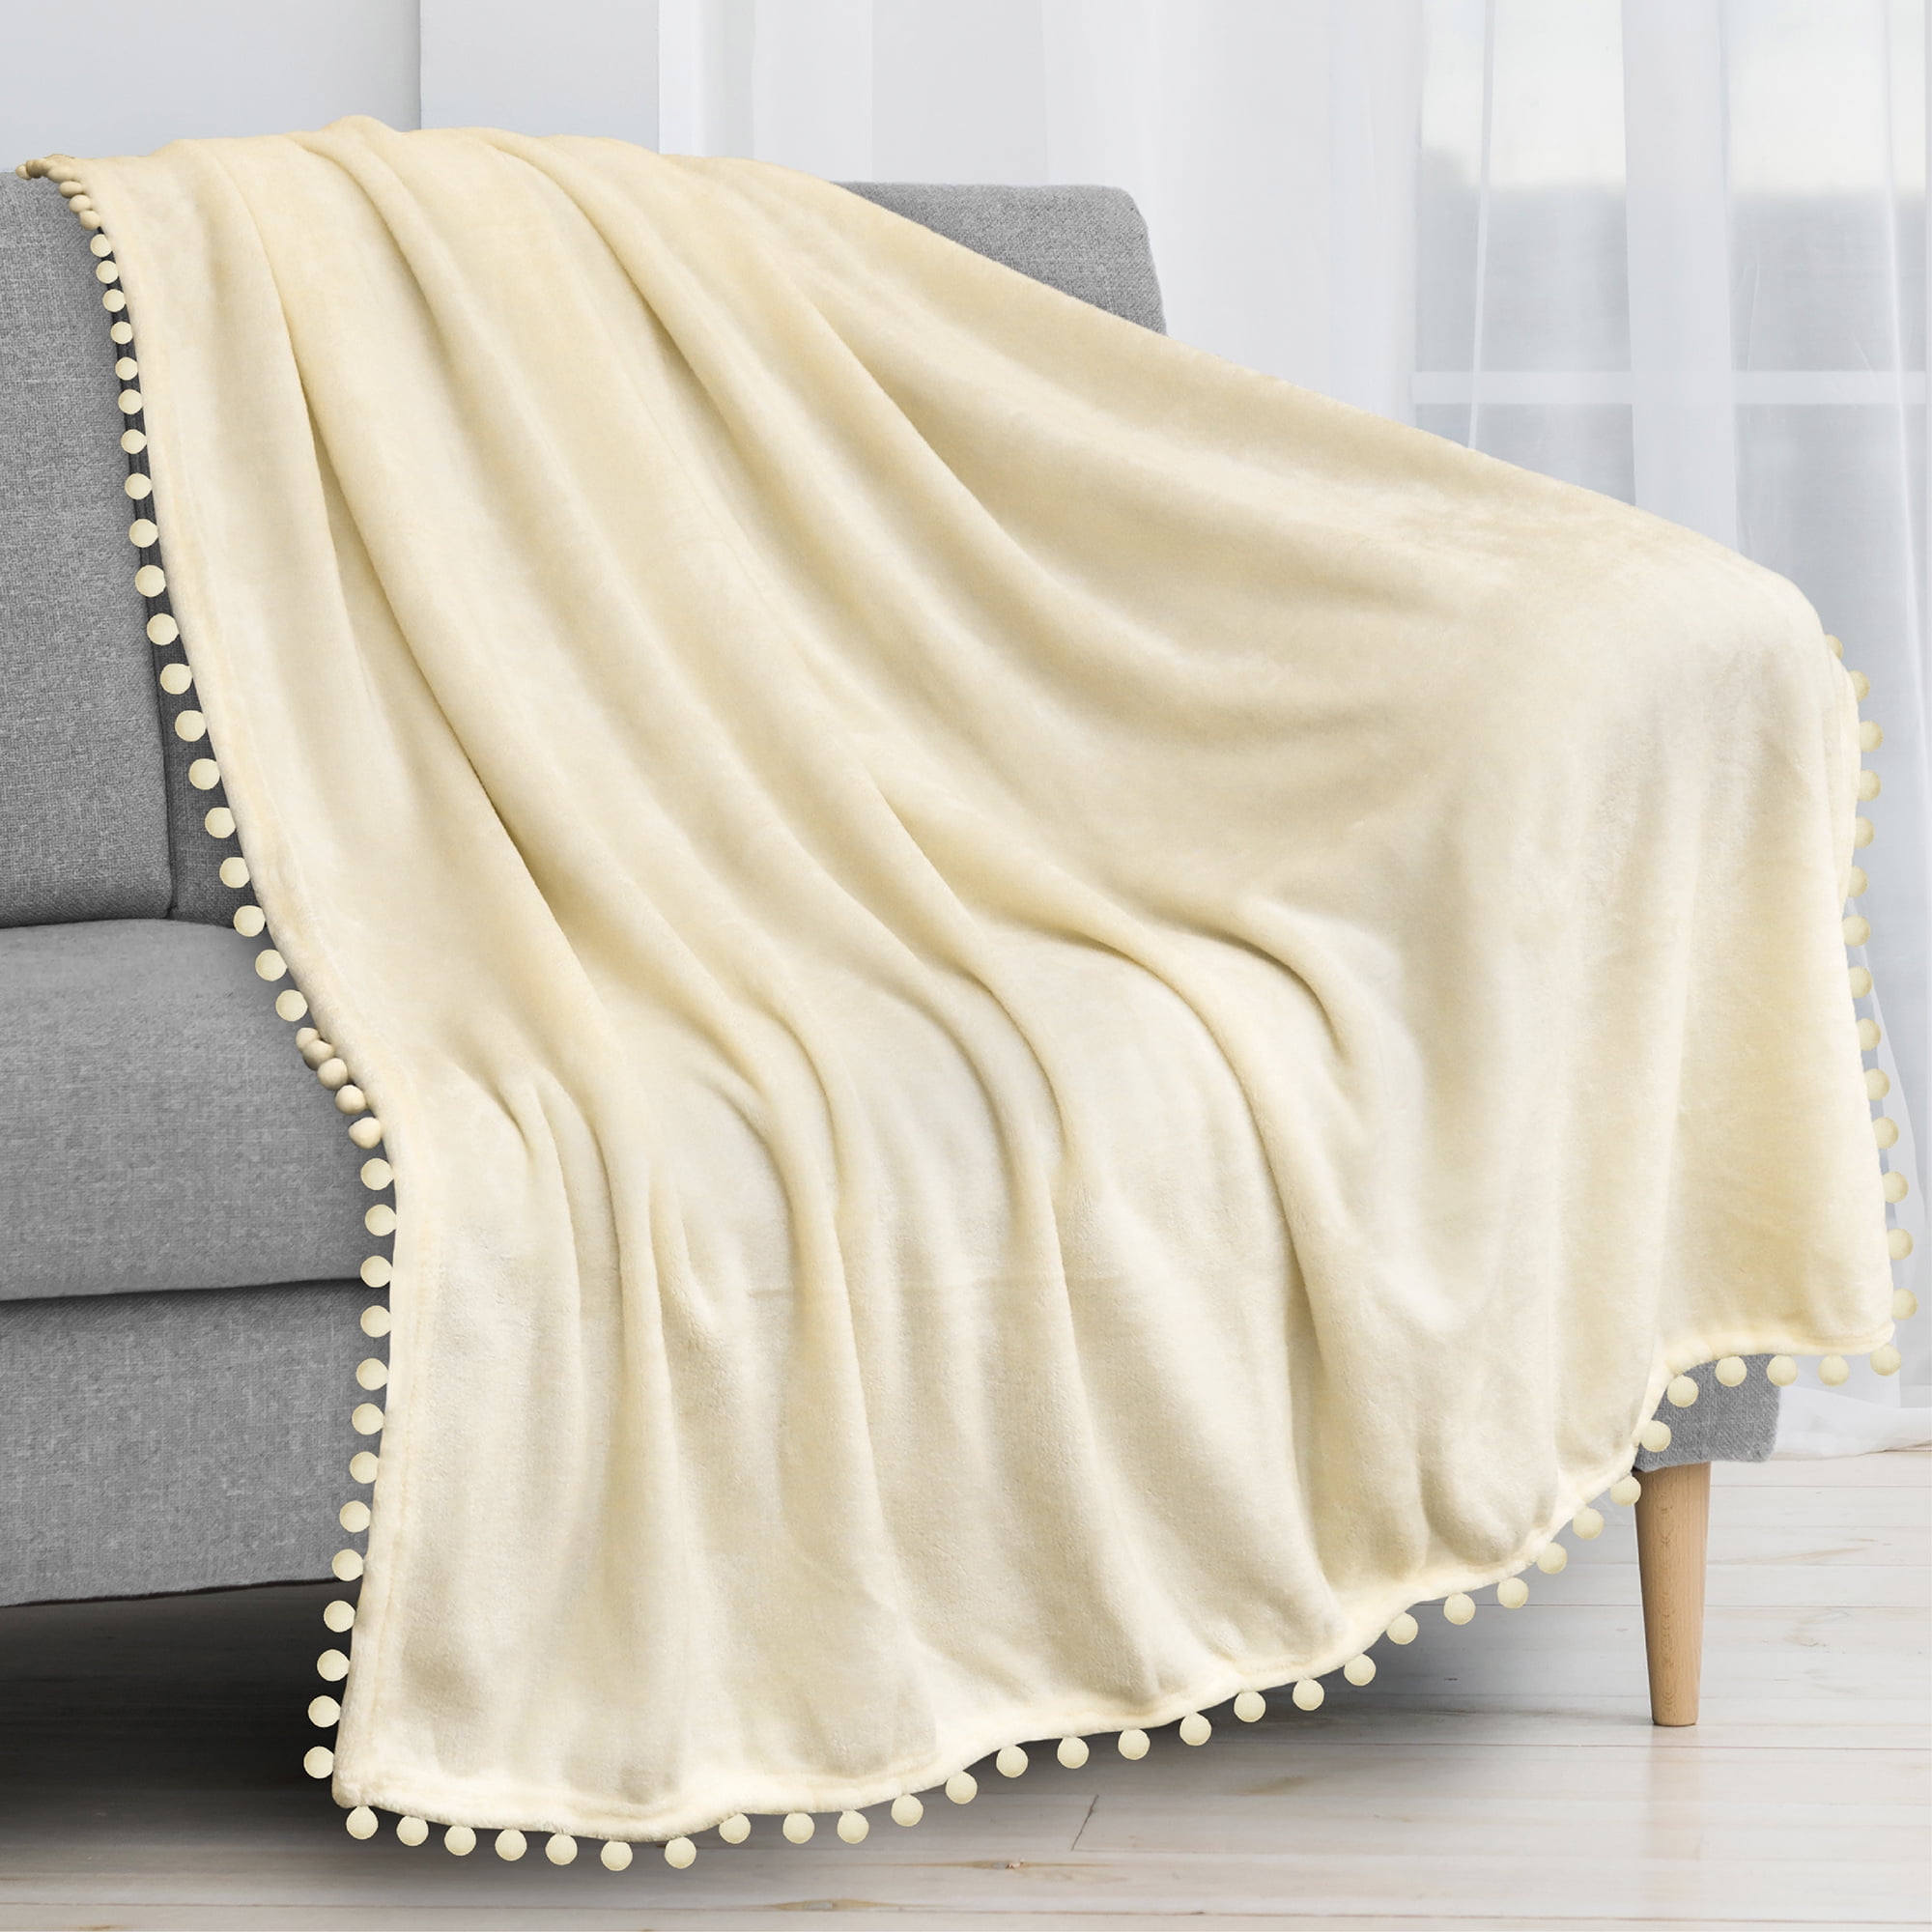 Cozy Blanket Polar Express Child's Fleece Blanket Throw 50x60 bed sofa lap 